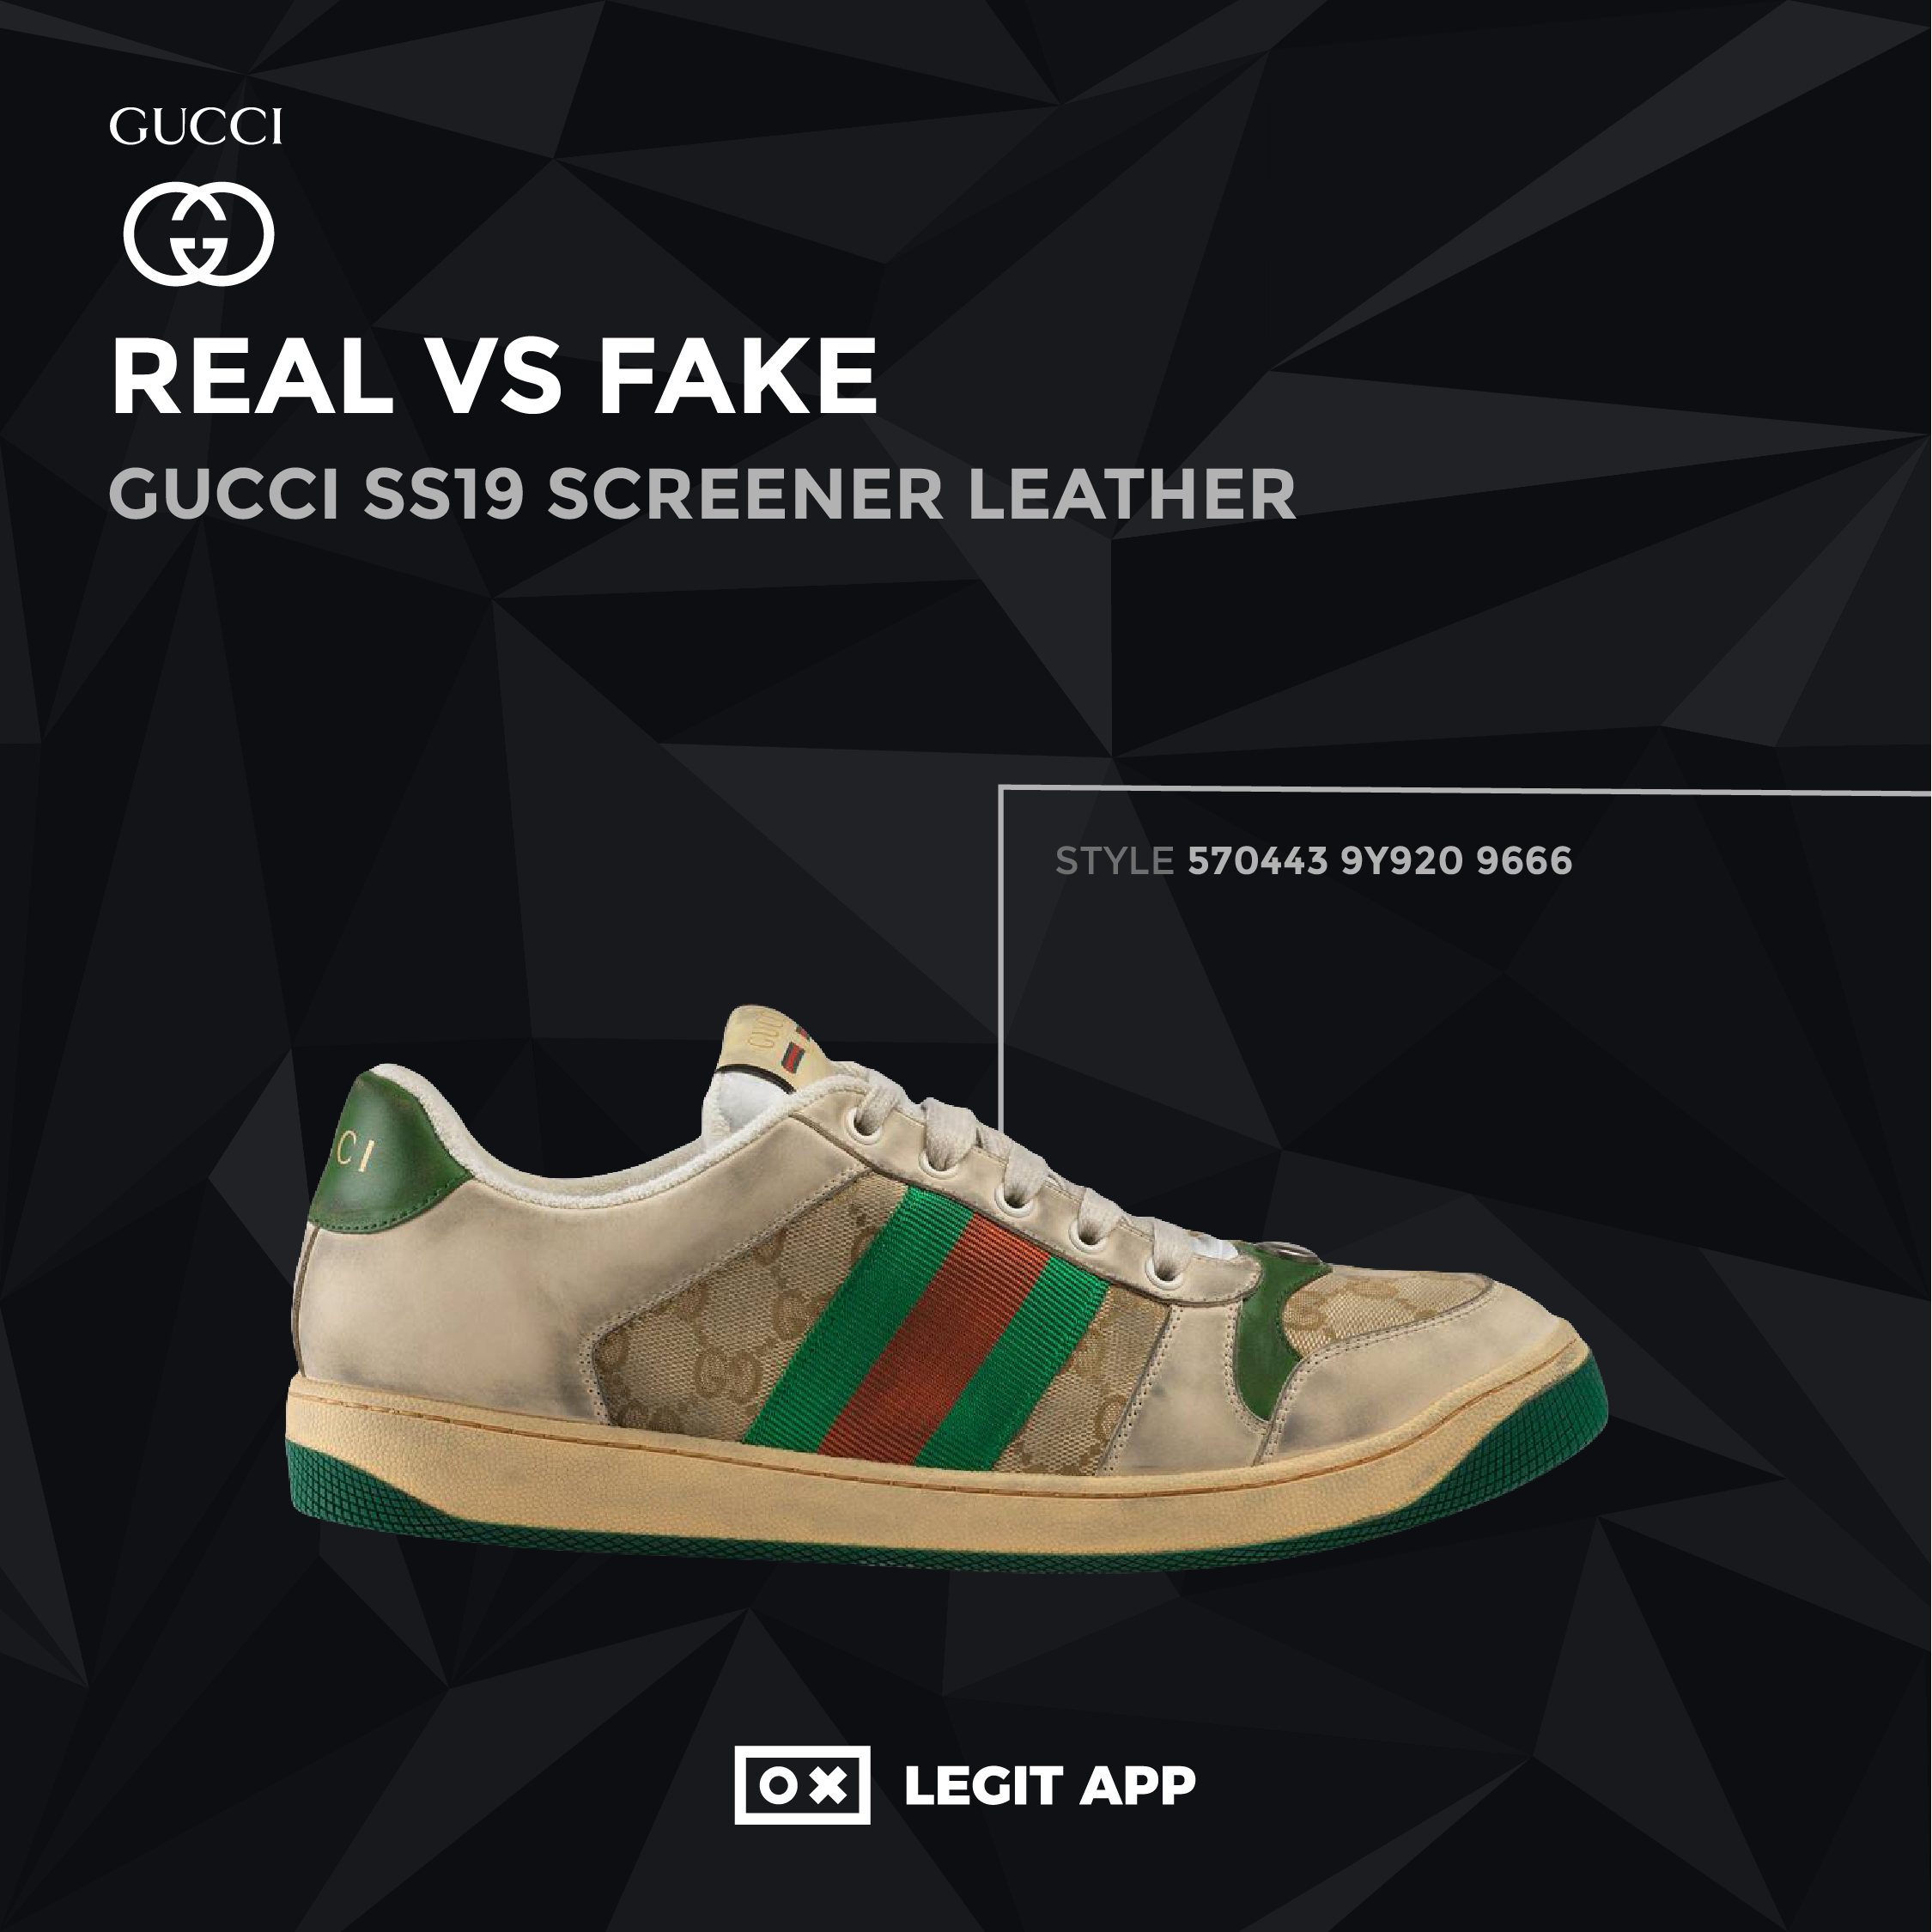 gucci sneakers fake vs real